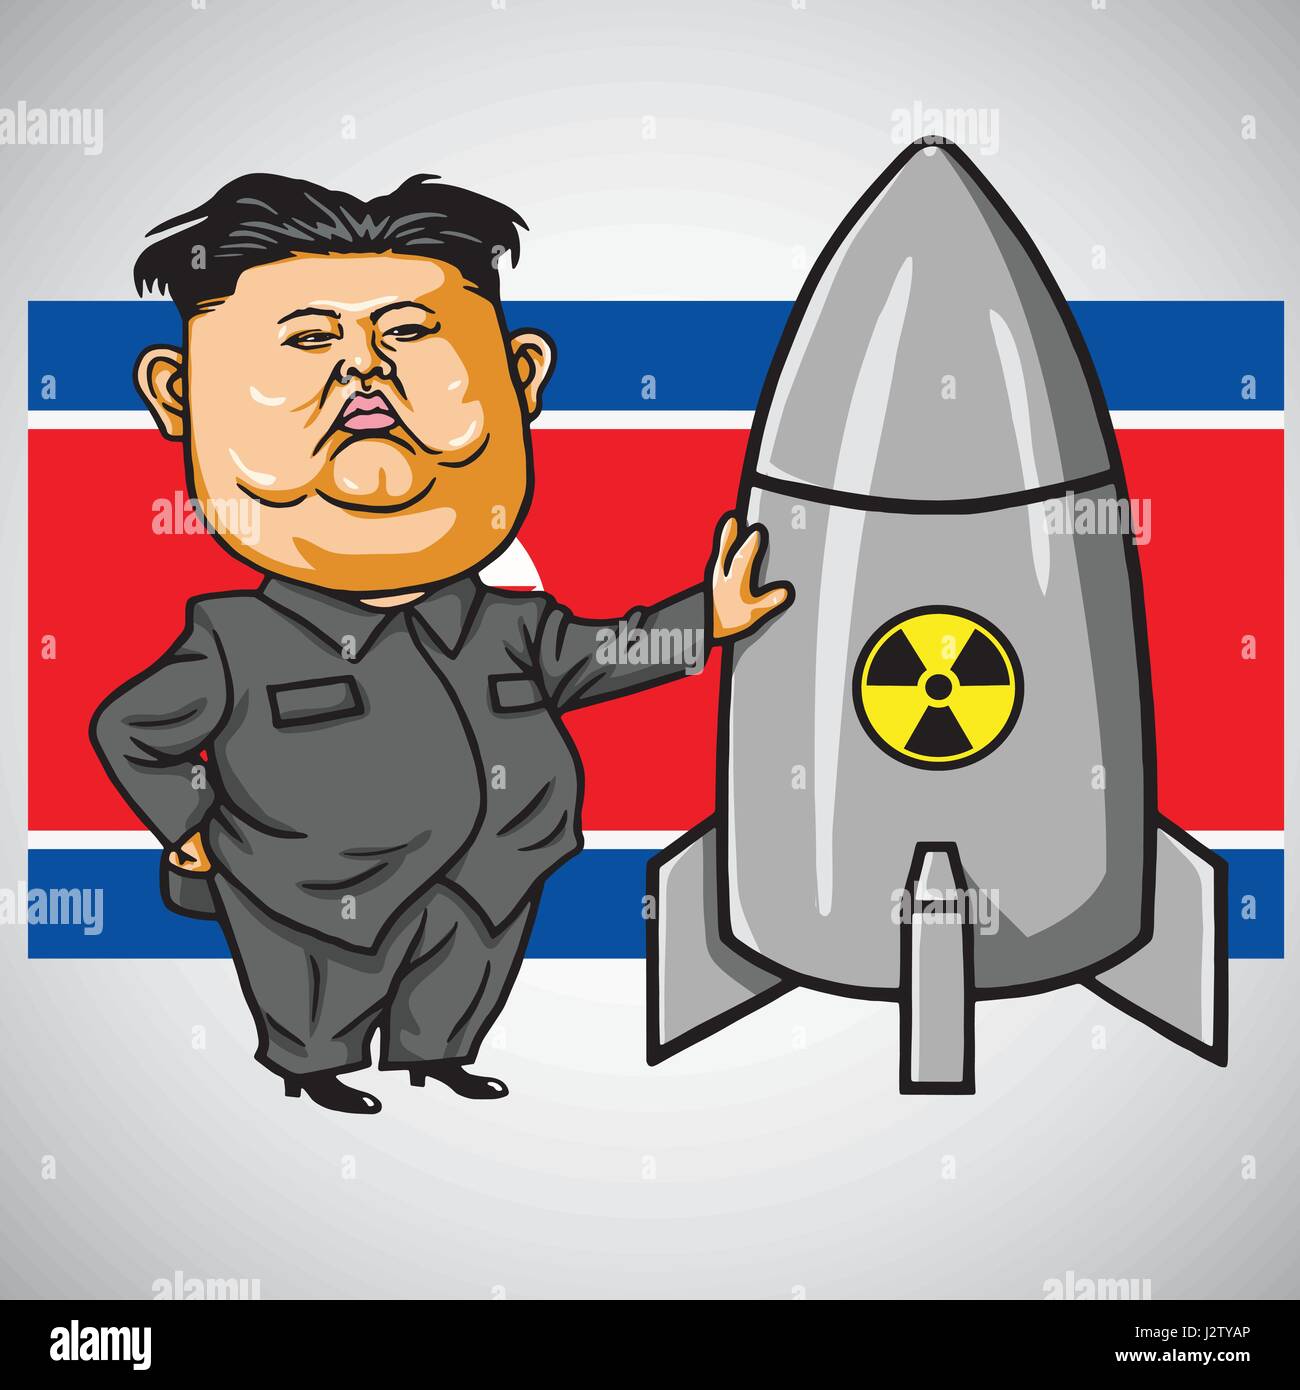 Kim Jong-un Cartoon with Missile on North Korea Flag Background Stock